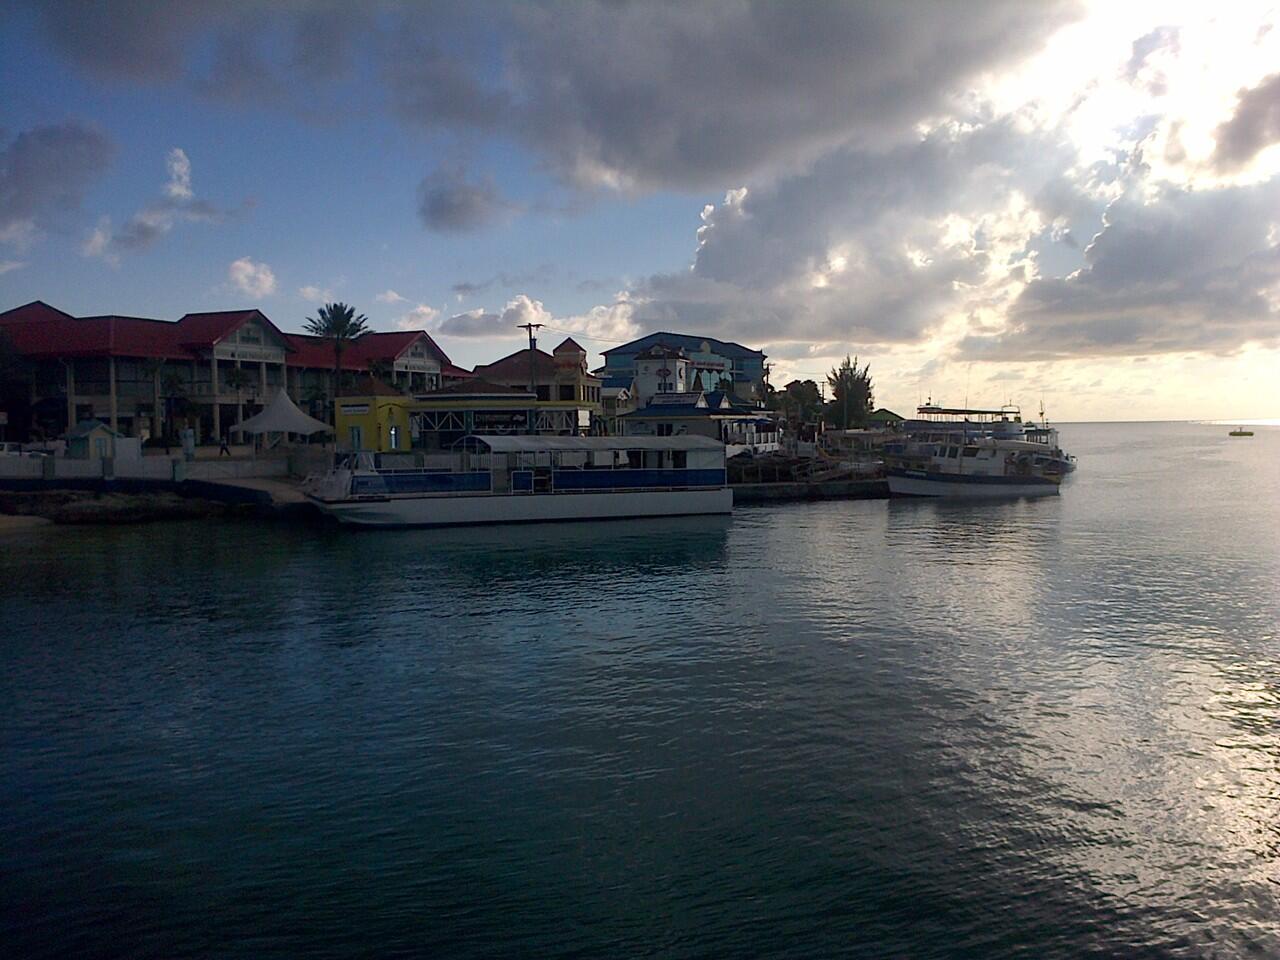 Menengok keindahan Cayman Islands (Kepulauan Cayman), negeri tanpa 'pajak' di Karibia